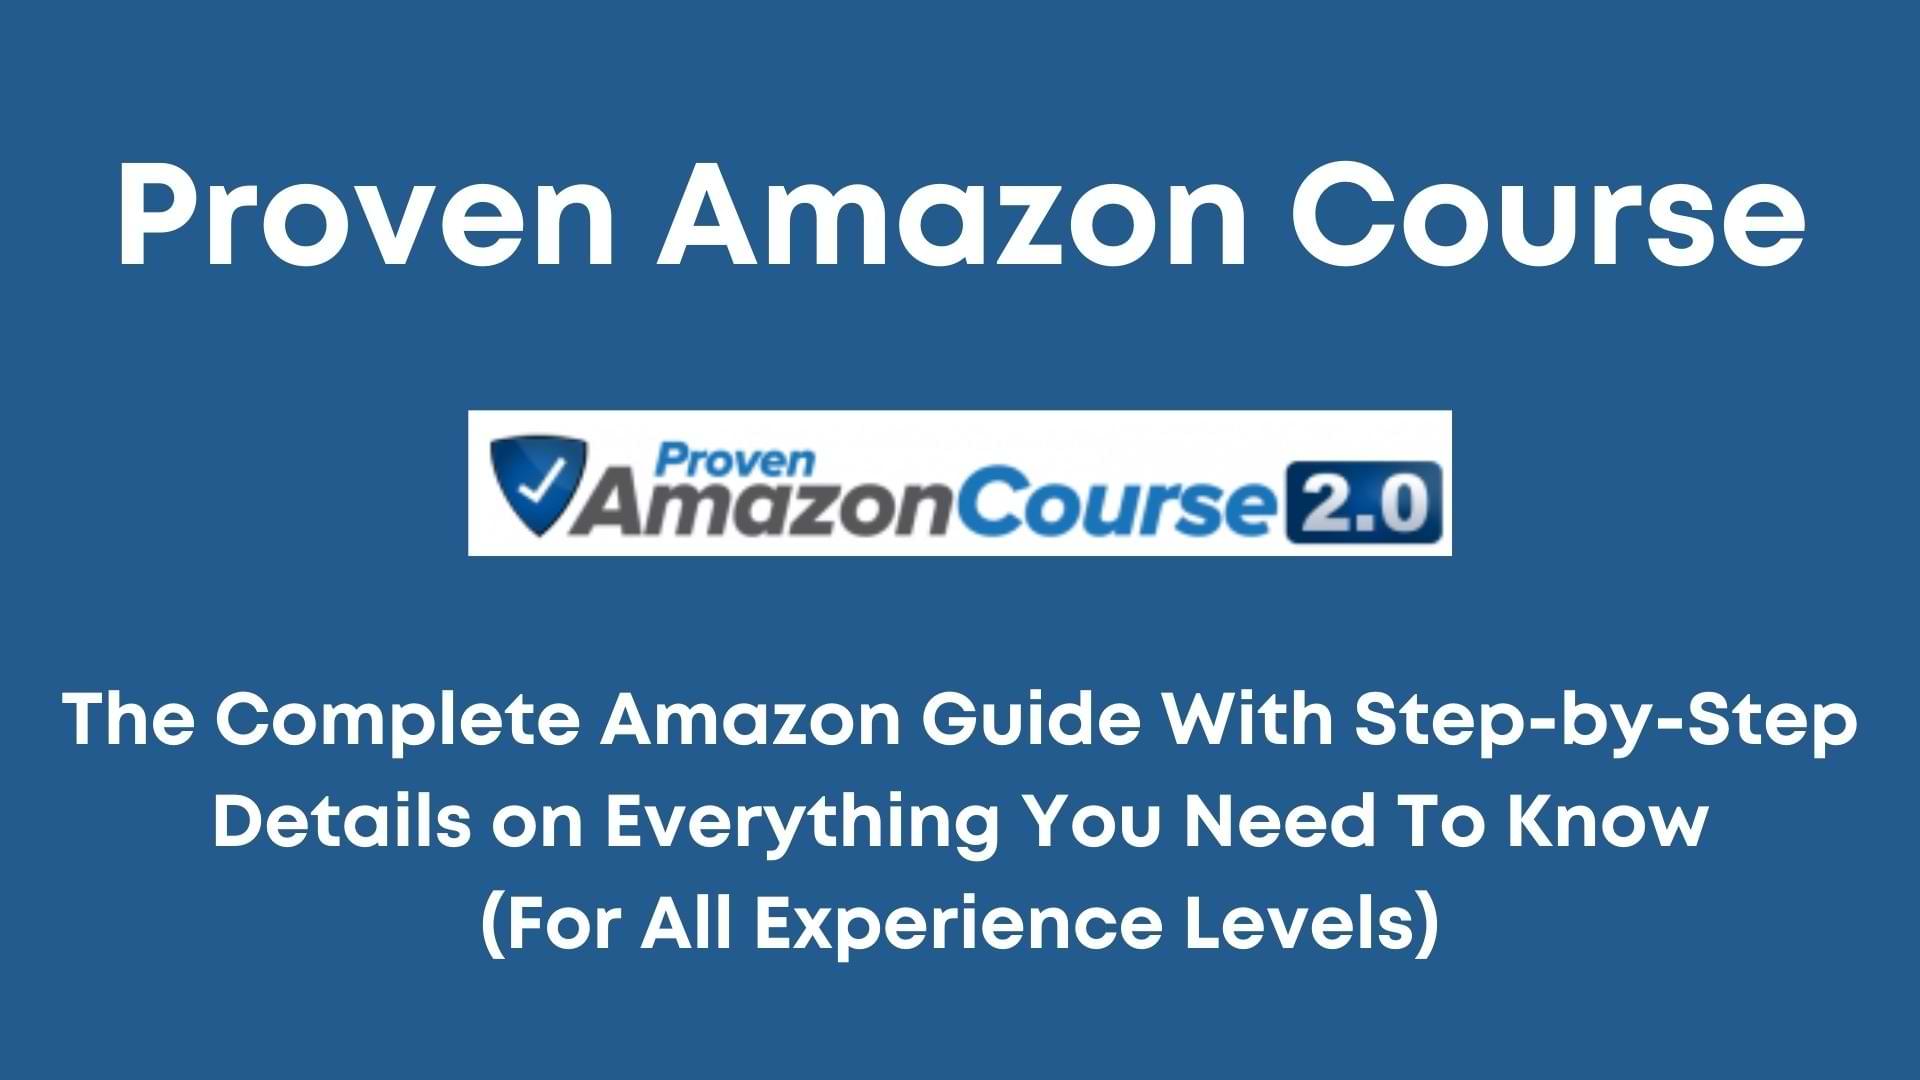 Proven Amazon Course (PAC)